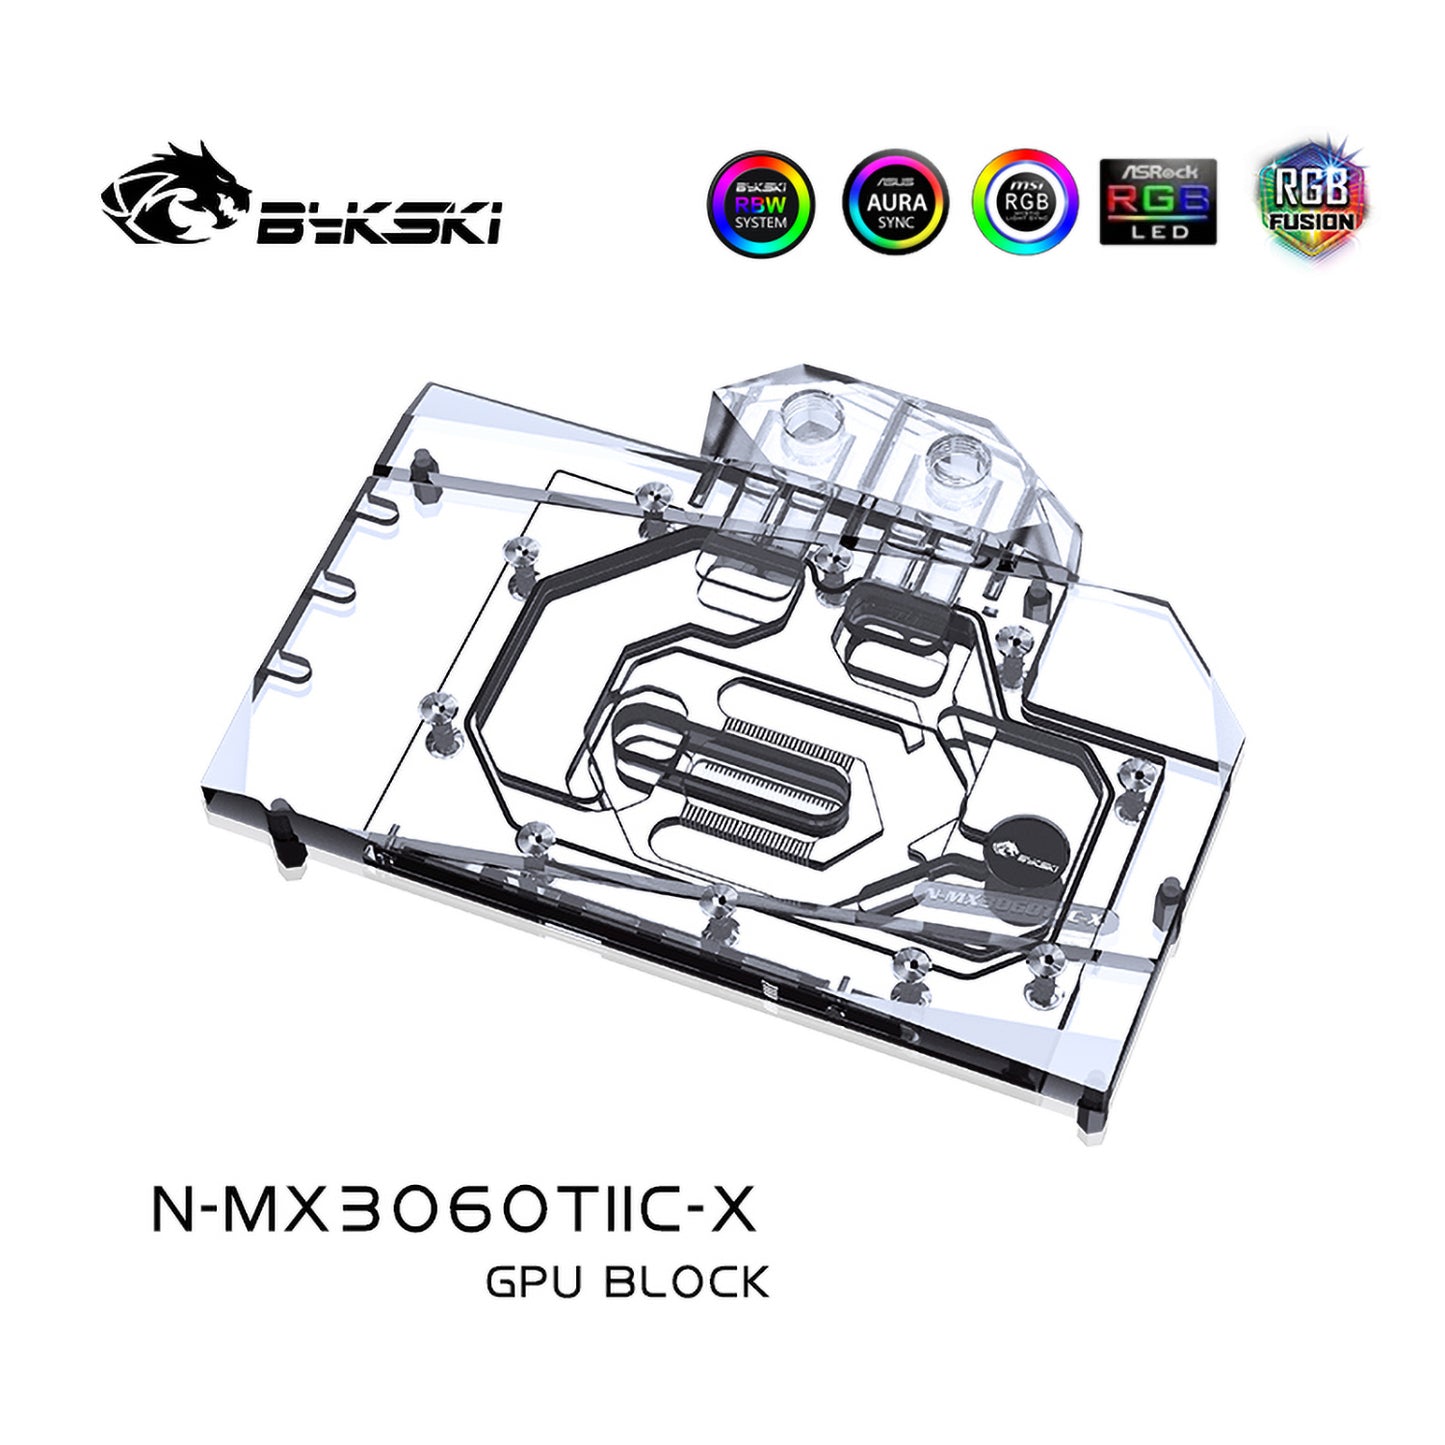 Bykski GPU Water Block For Maxsun RTX 3060 Ti iCraft OC 8G, Full Cover With Backplate PC Water Cooling Cooler, N-MX3060TIIC-X